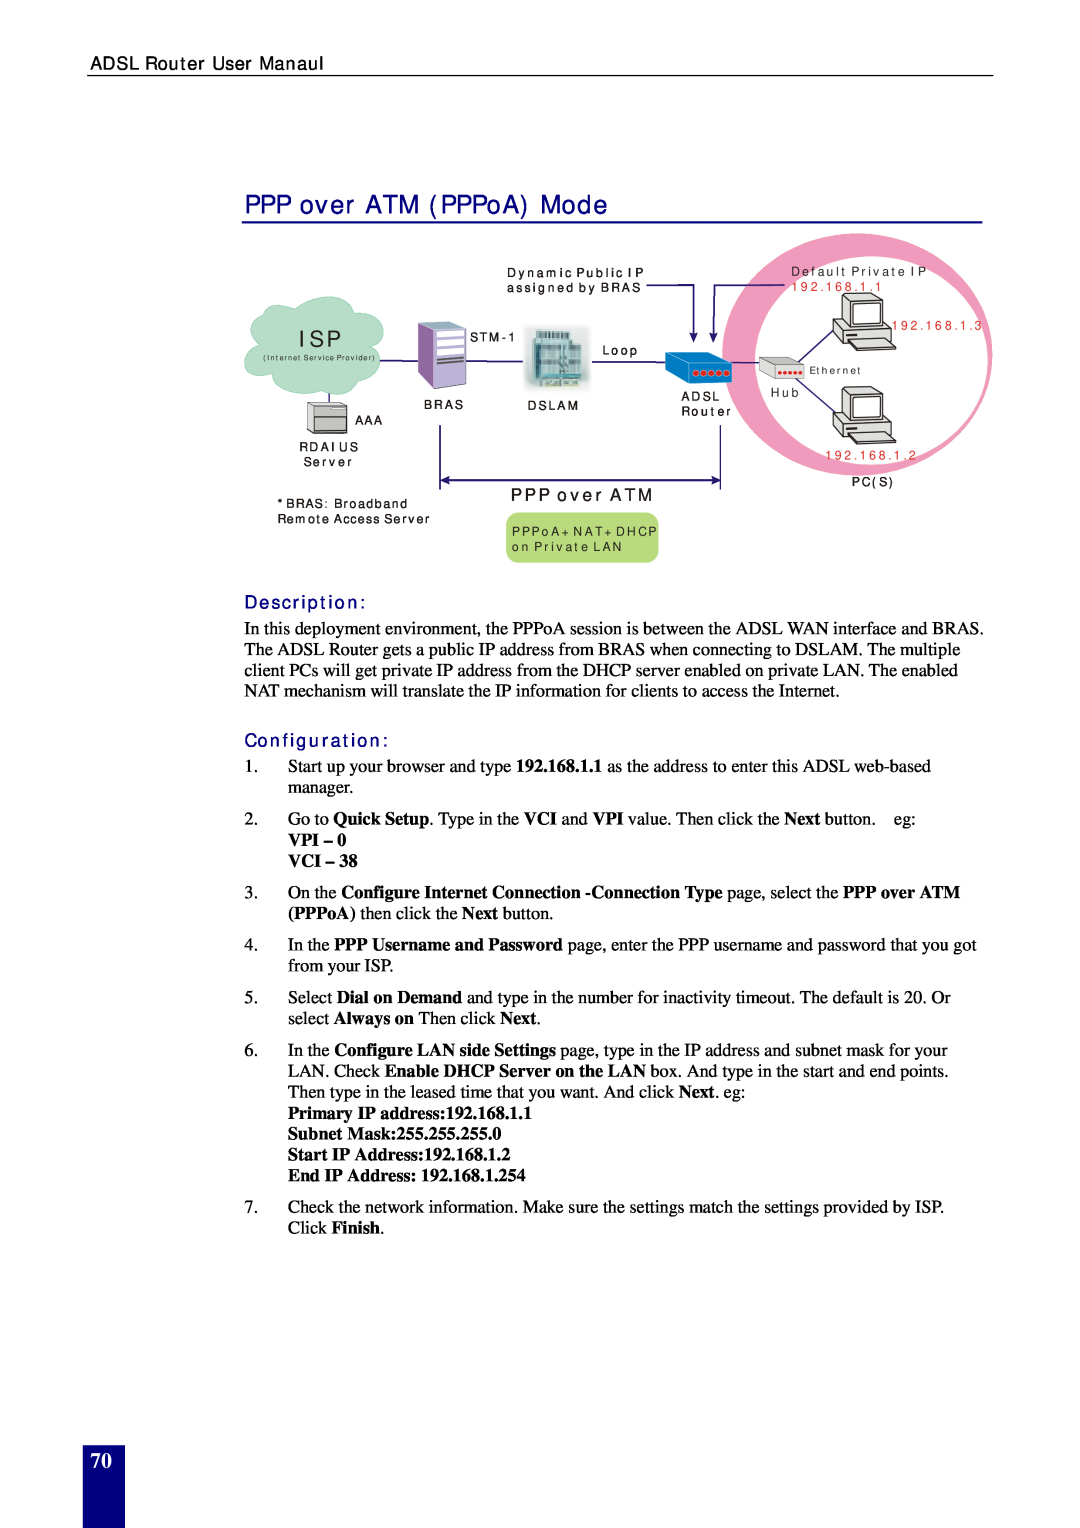 Dynalink RTA770W user manual PPP over ATM PPPoA Mode, Description, Configuration, VPI - 0 VCI 